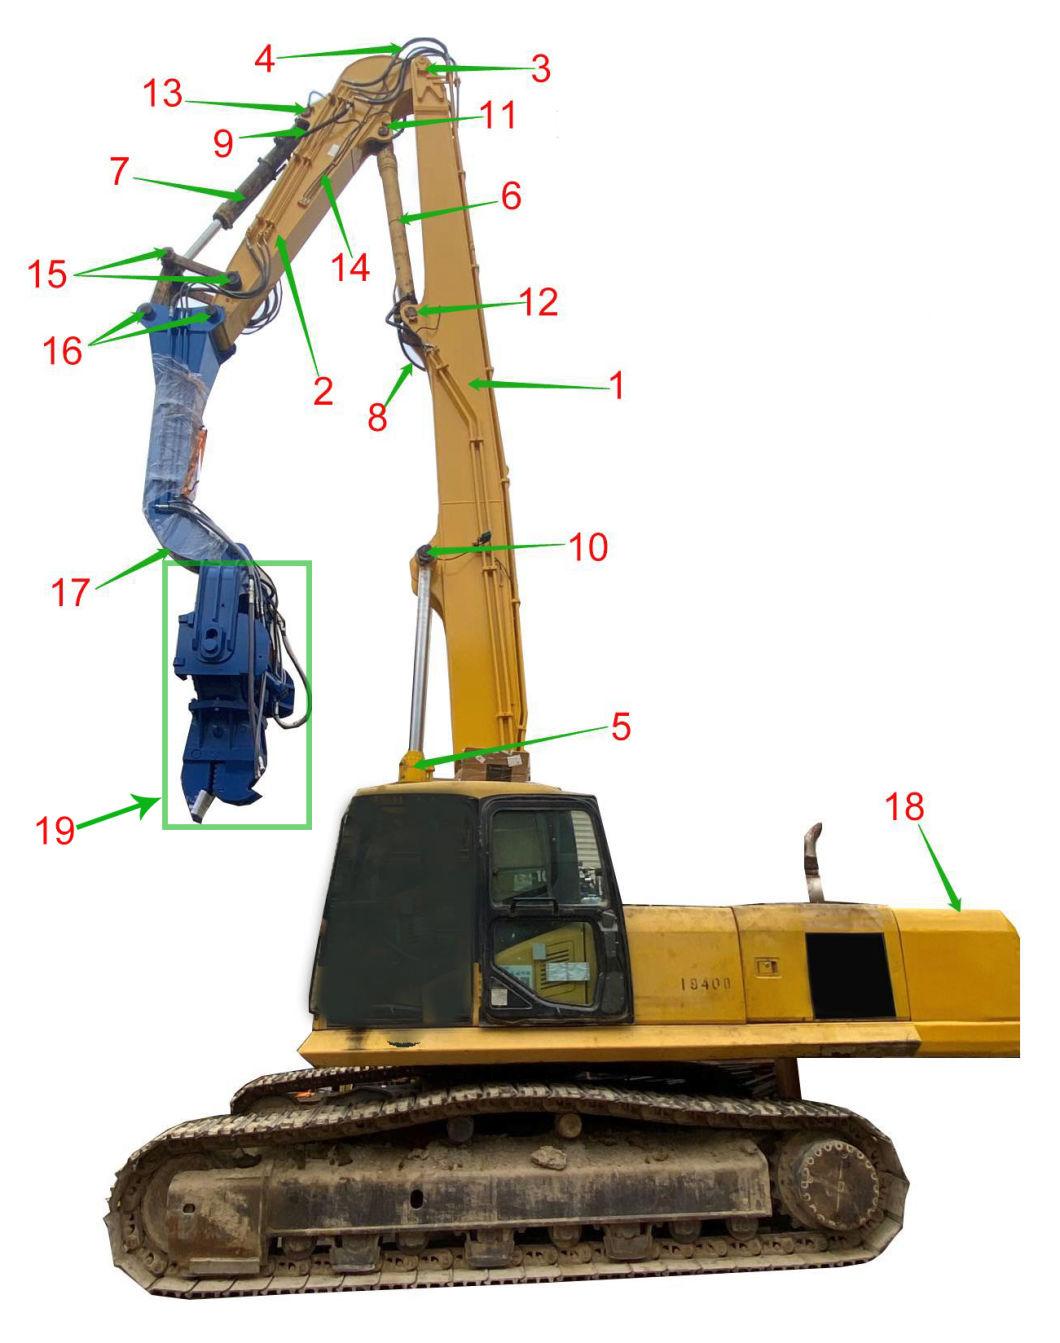 16.5-Meter Long 45-50ton Excavator Pile Driving Arm Has a Pile Driving Depth of 15-Meter